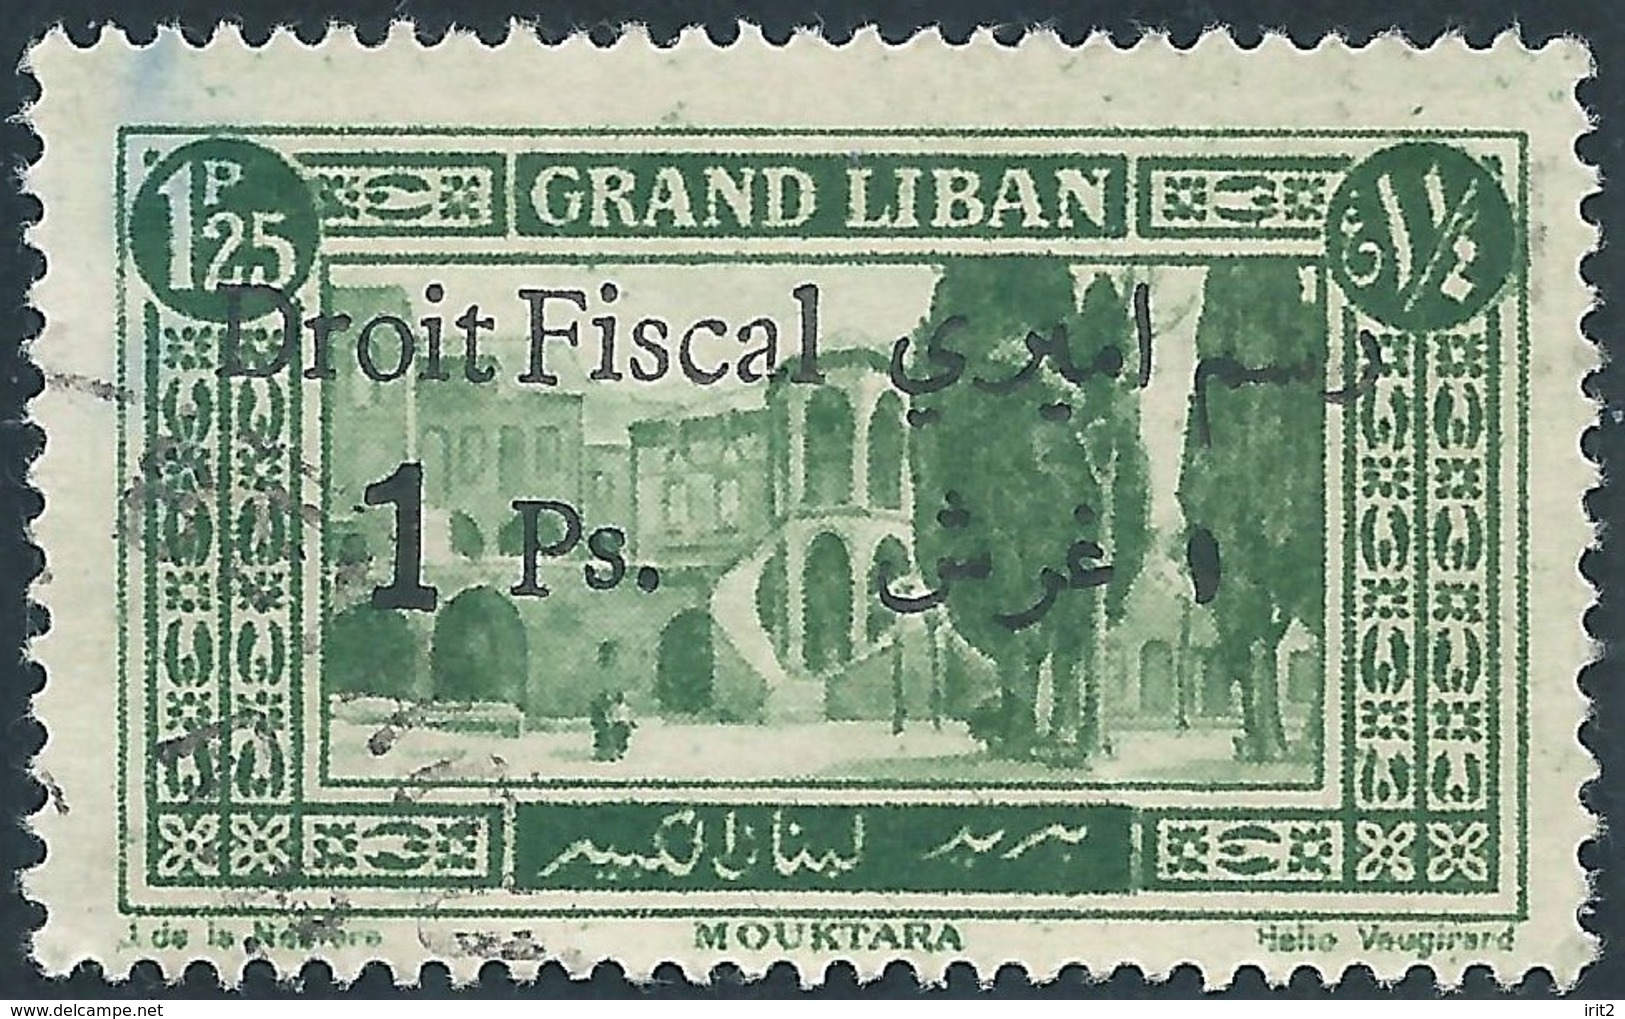 LIBANO Lebanon Liban 1925/27 Grand Liban Revenue Stamps Surcharged Black On 1.25 Ps Used - Lebanon